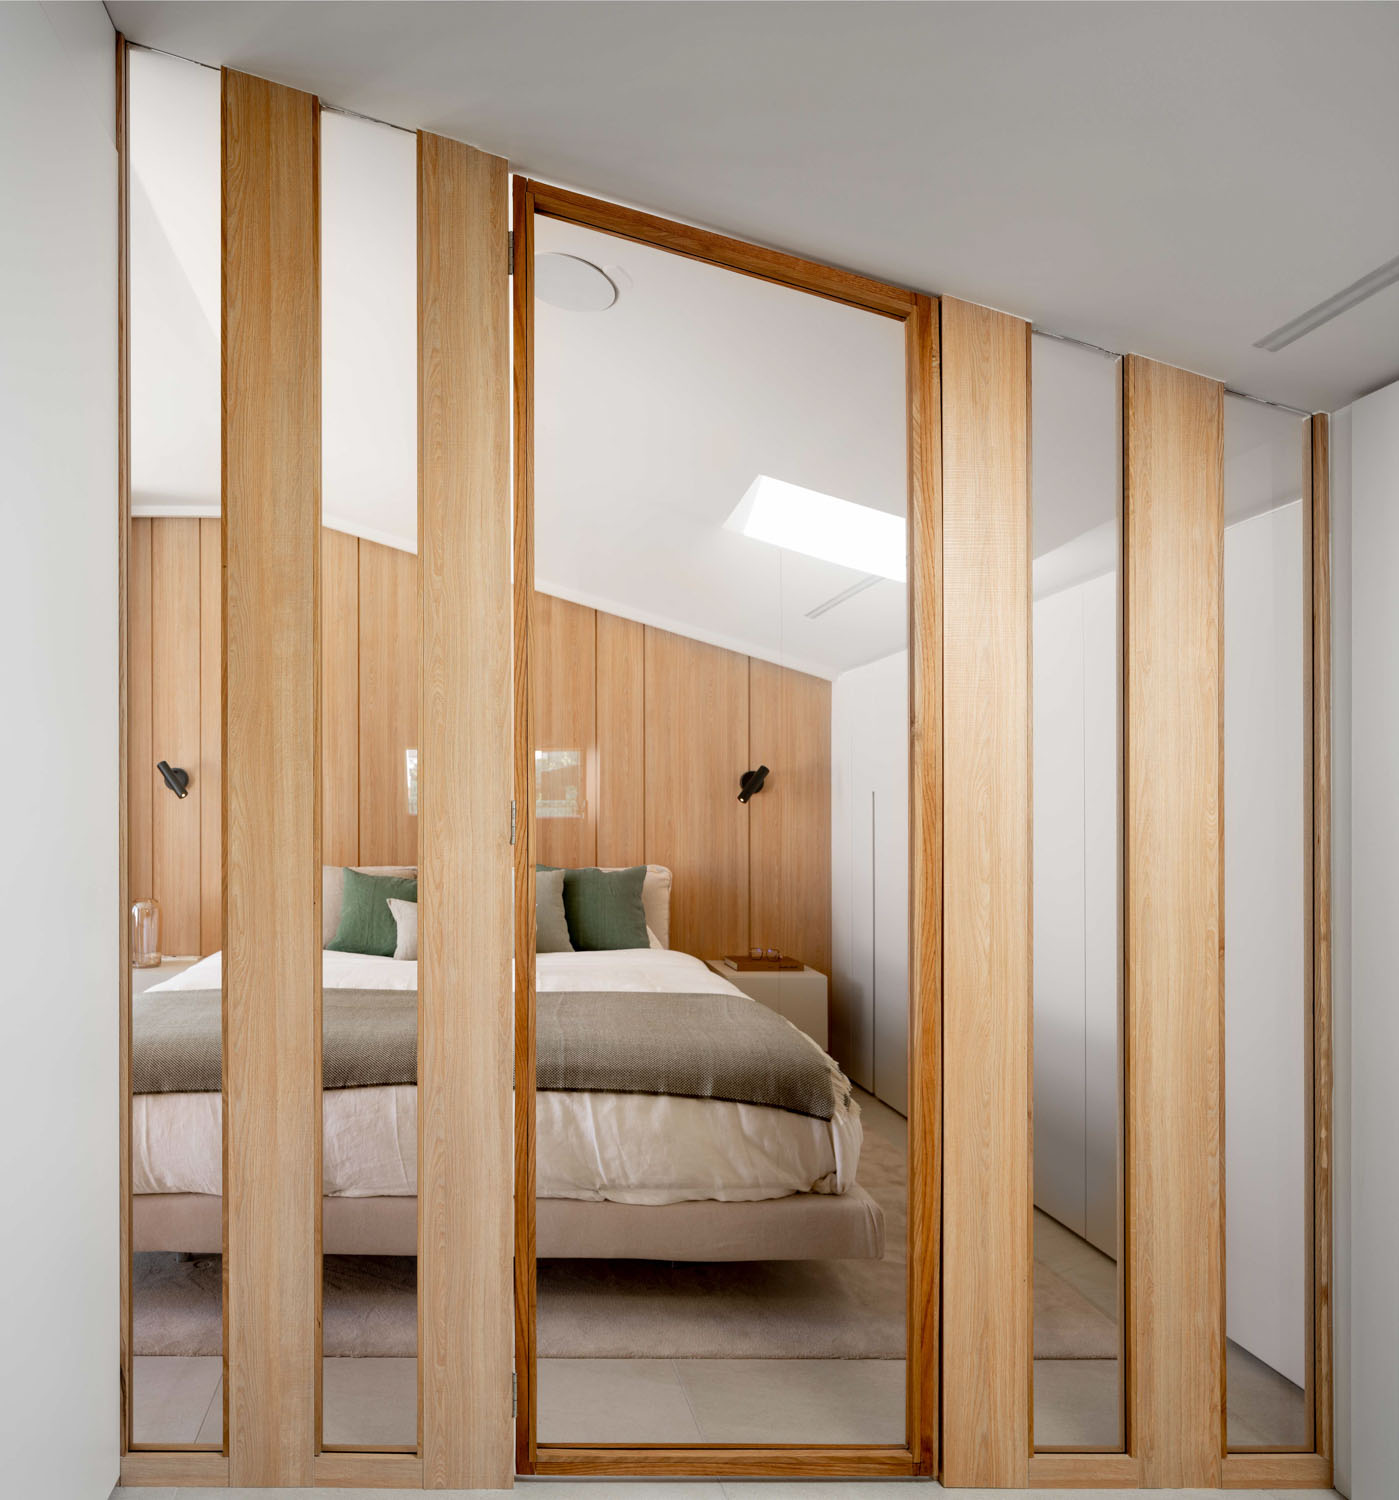 Imagen del dormitorio - Fotografía de arquitectura e interiores por Biderbost Photo